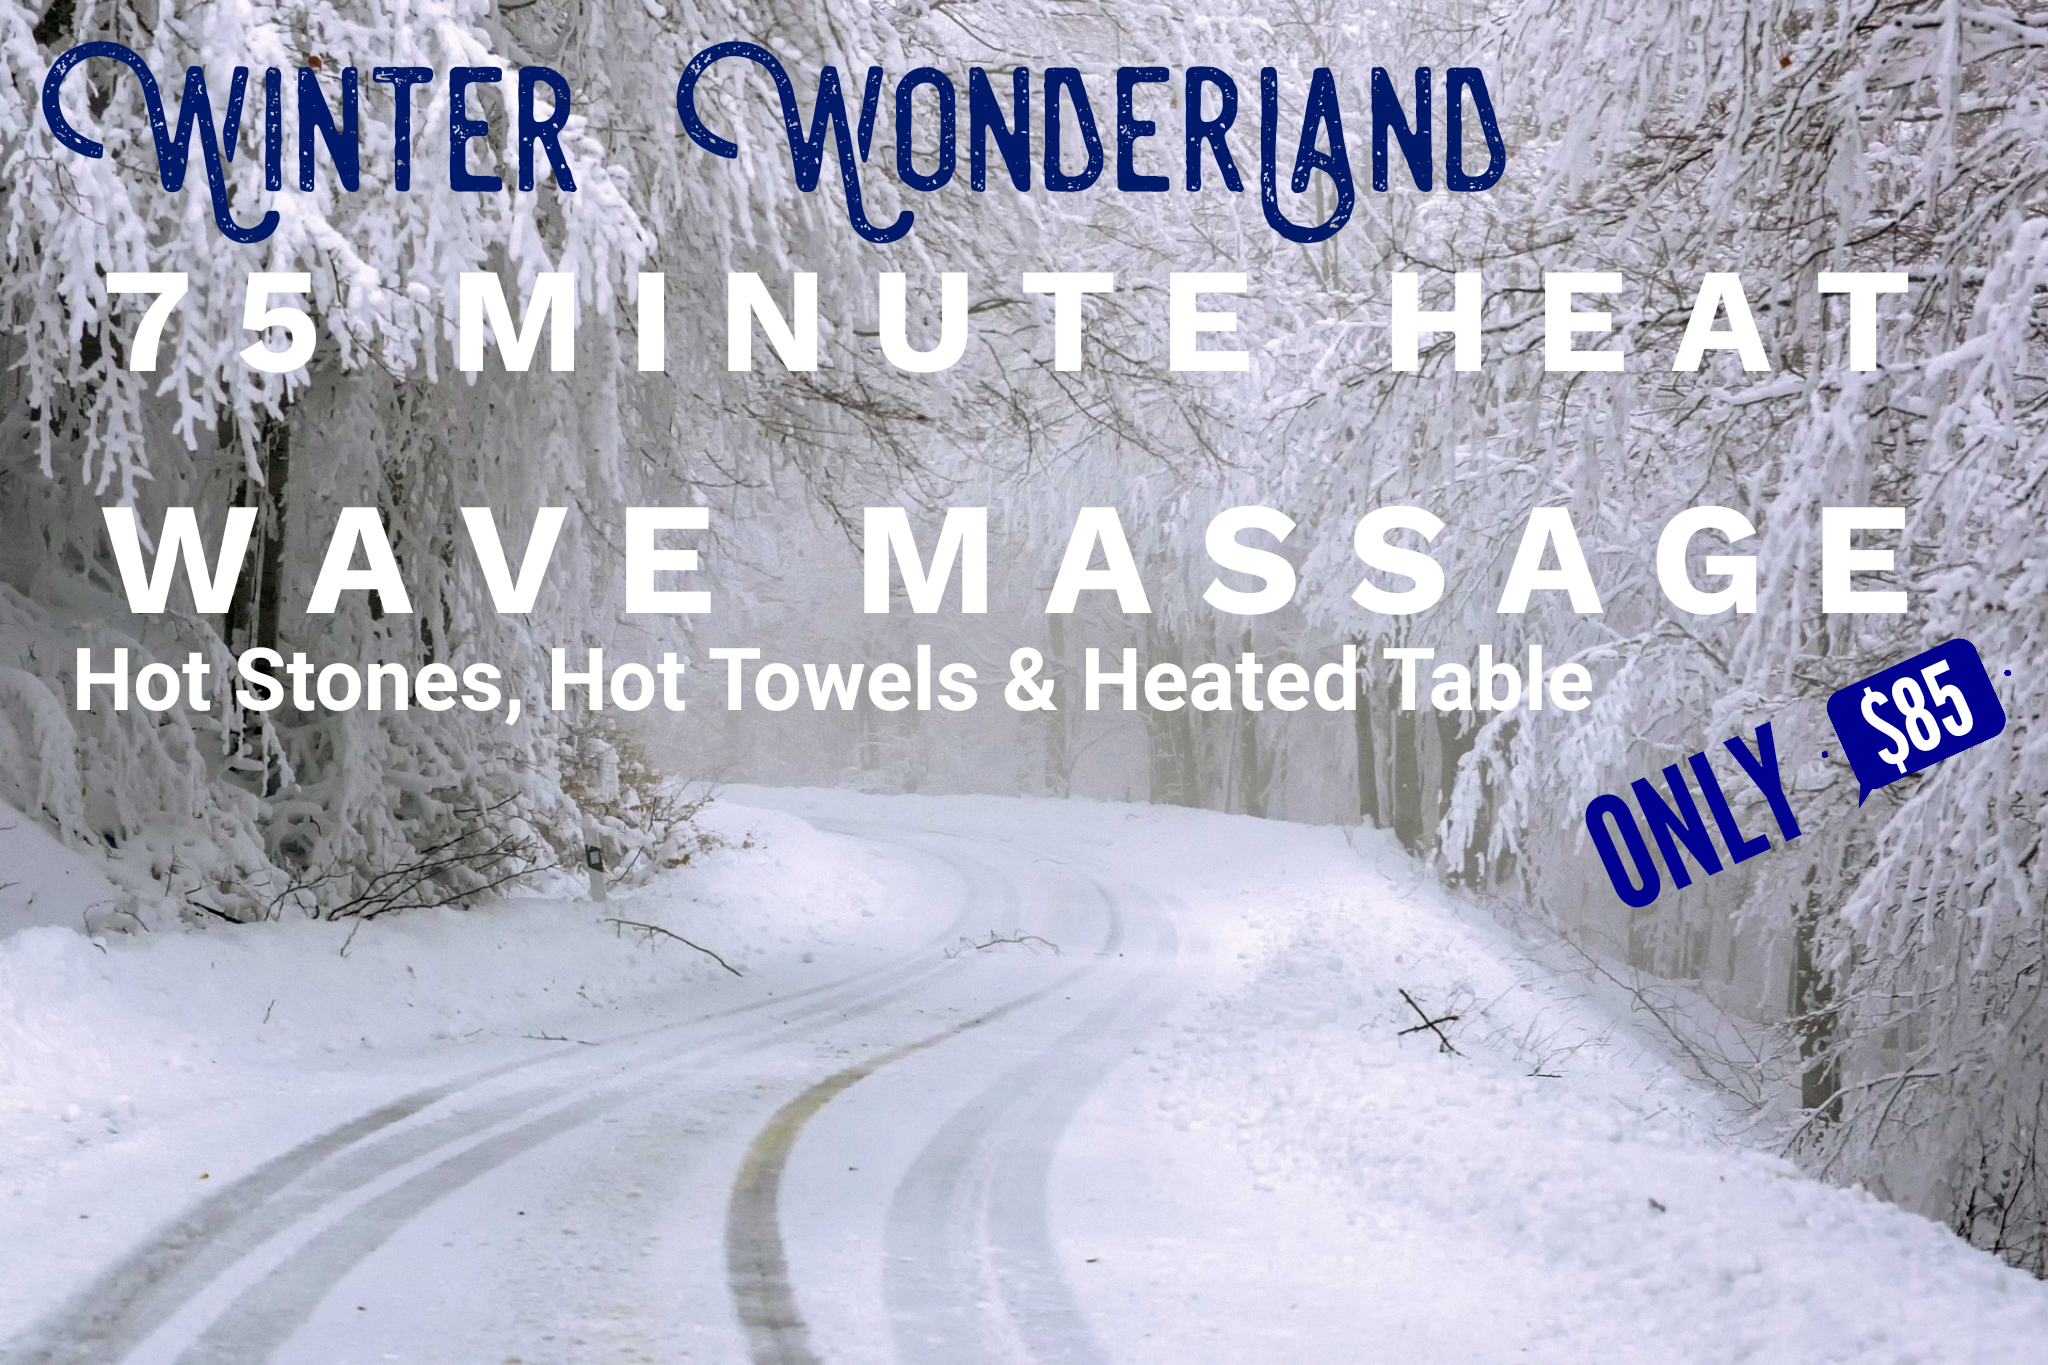 75 minute heat massage only $85